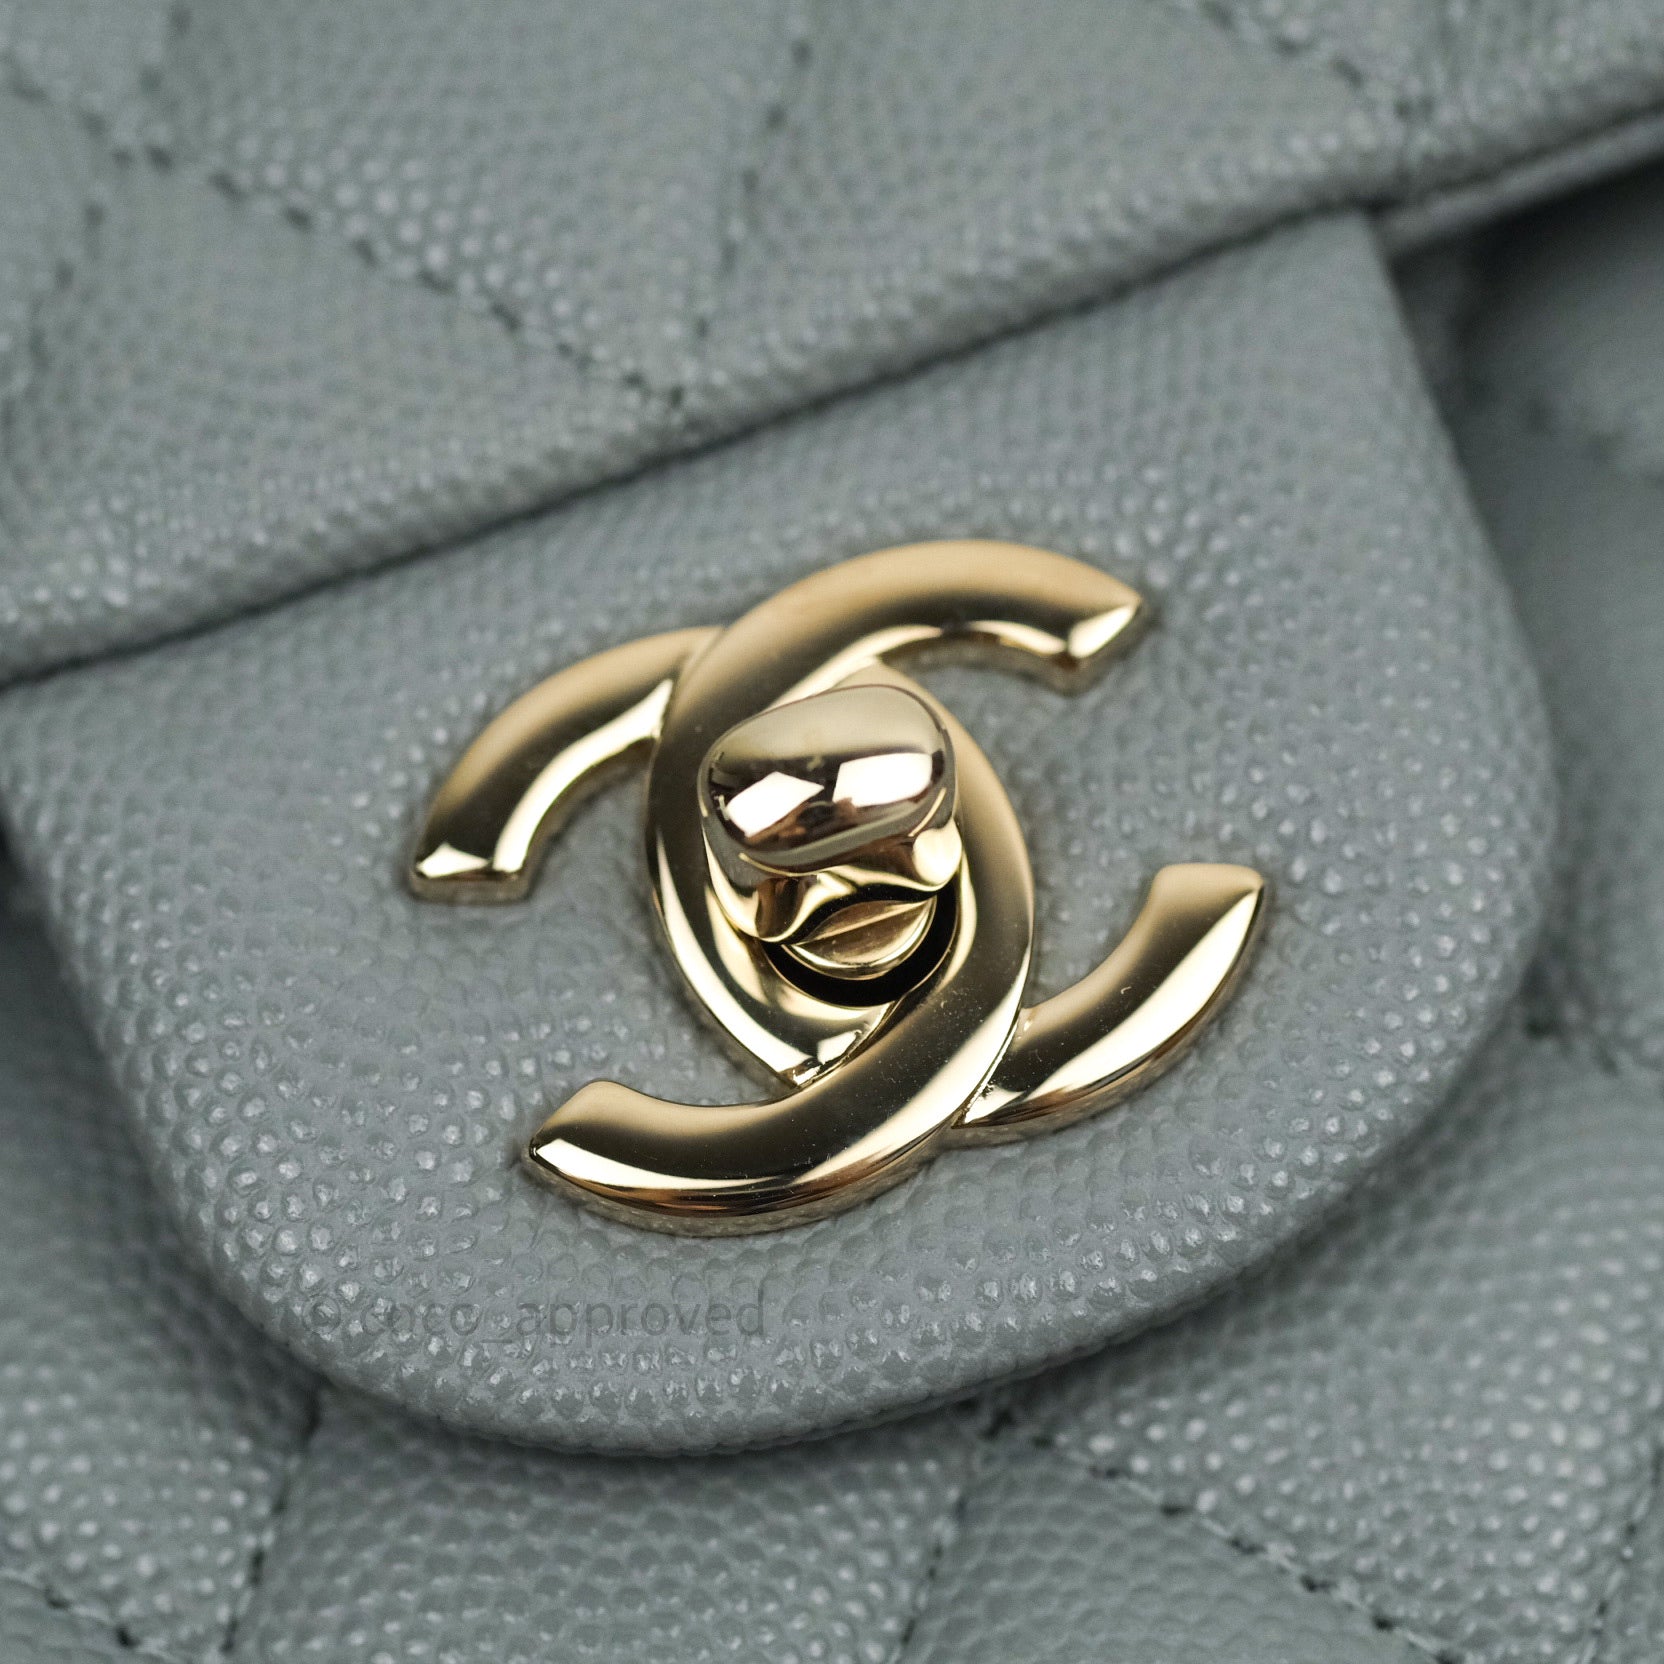 Chanel Classic Small S/M Flap Grey Caviar Light Gold Hardware